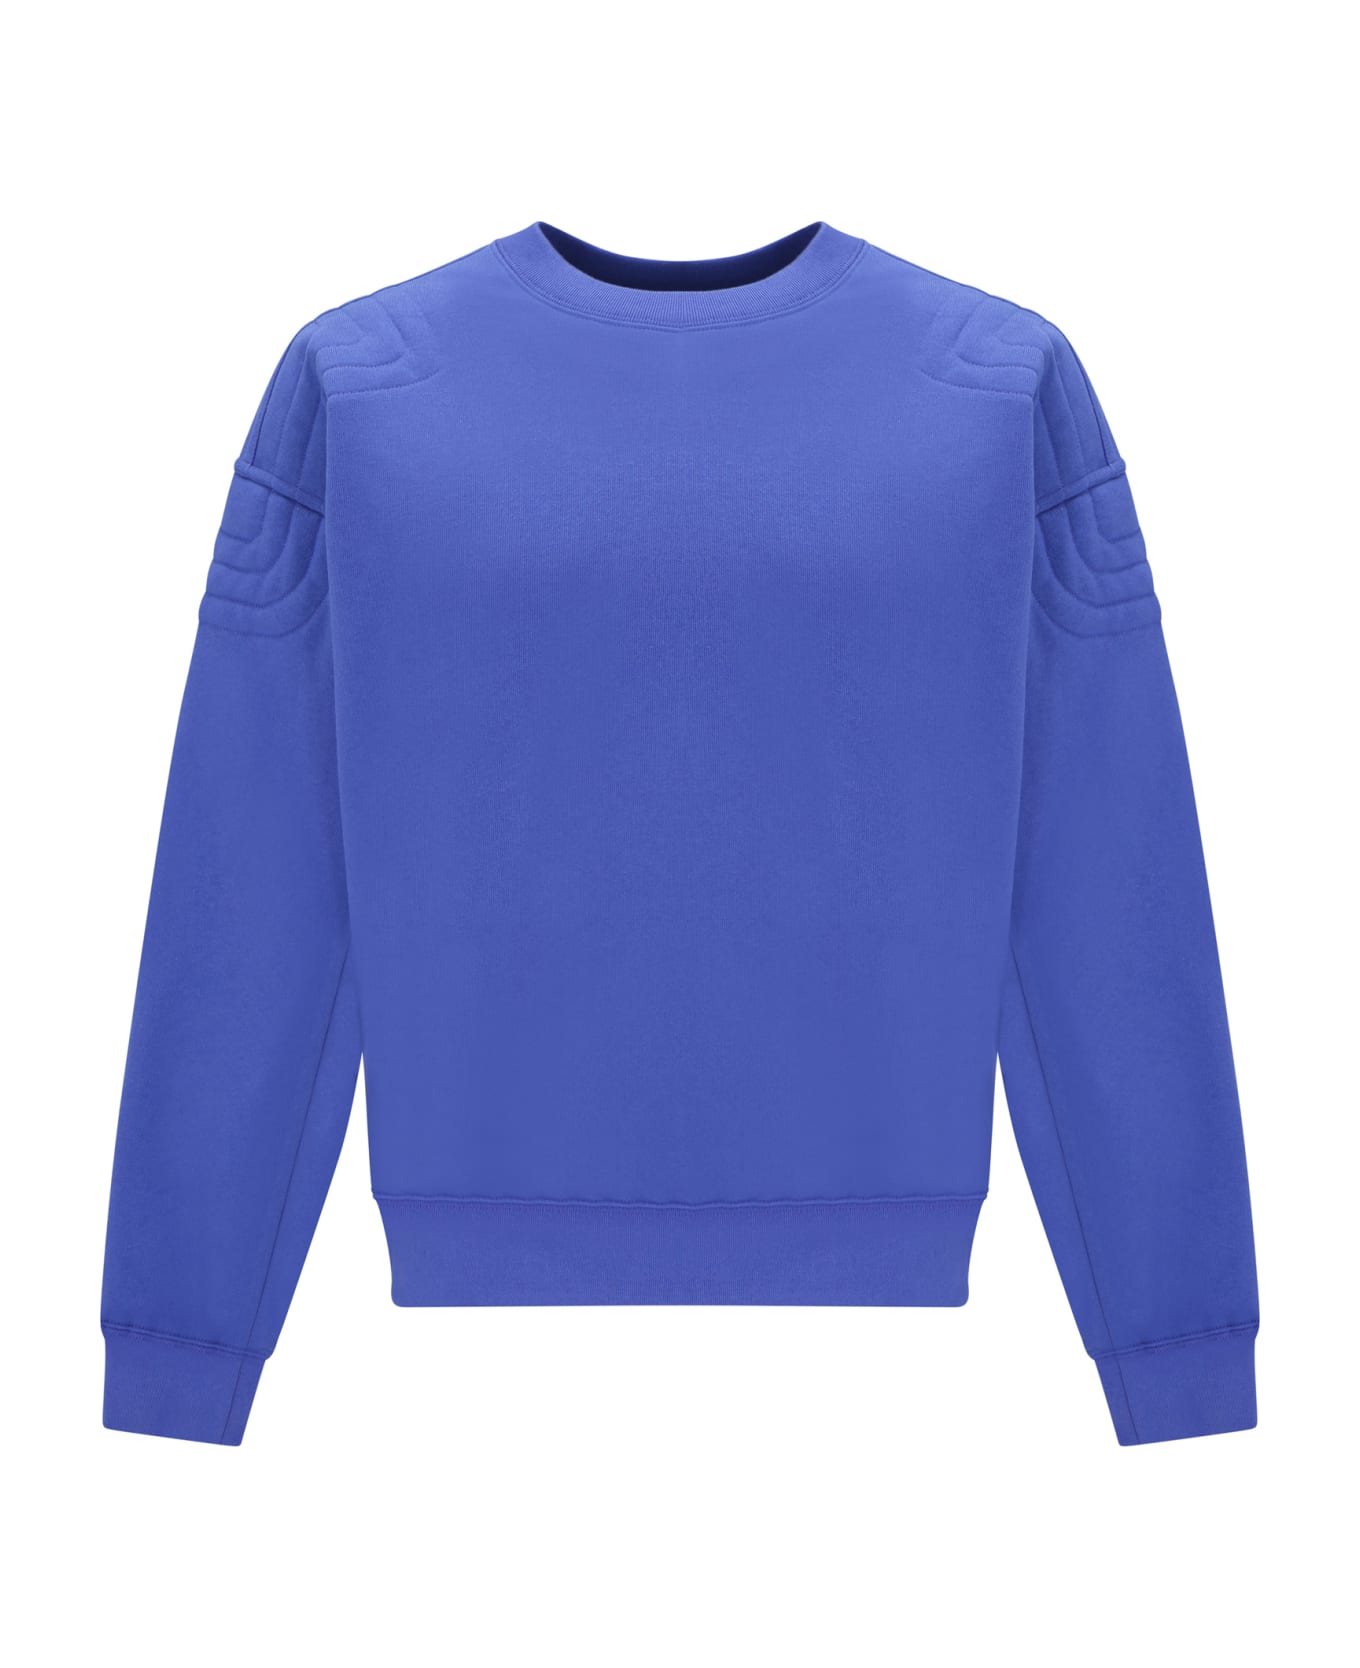 Gucci Cotton Sweatshirt - Admiral/mc